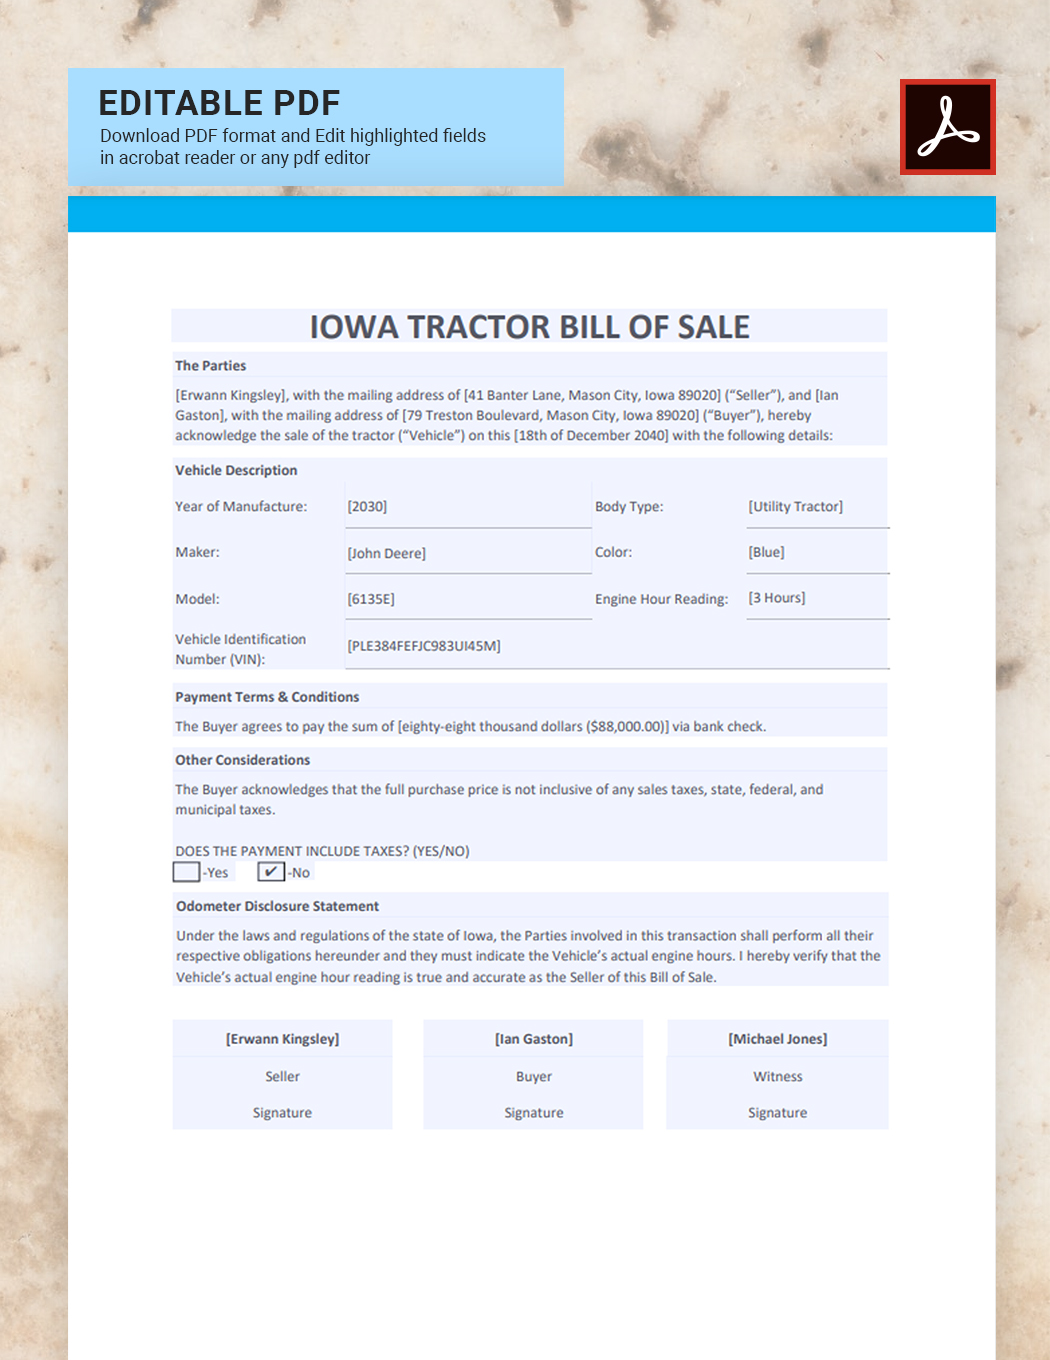 Iowa Tractor Bill of Sale Template